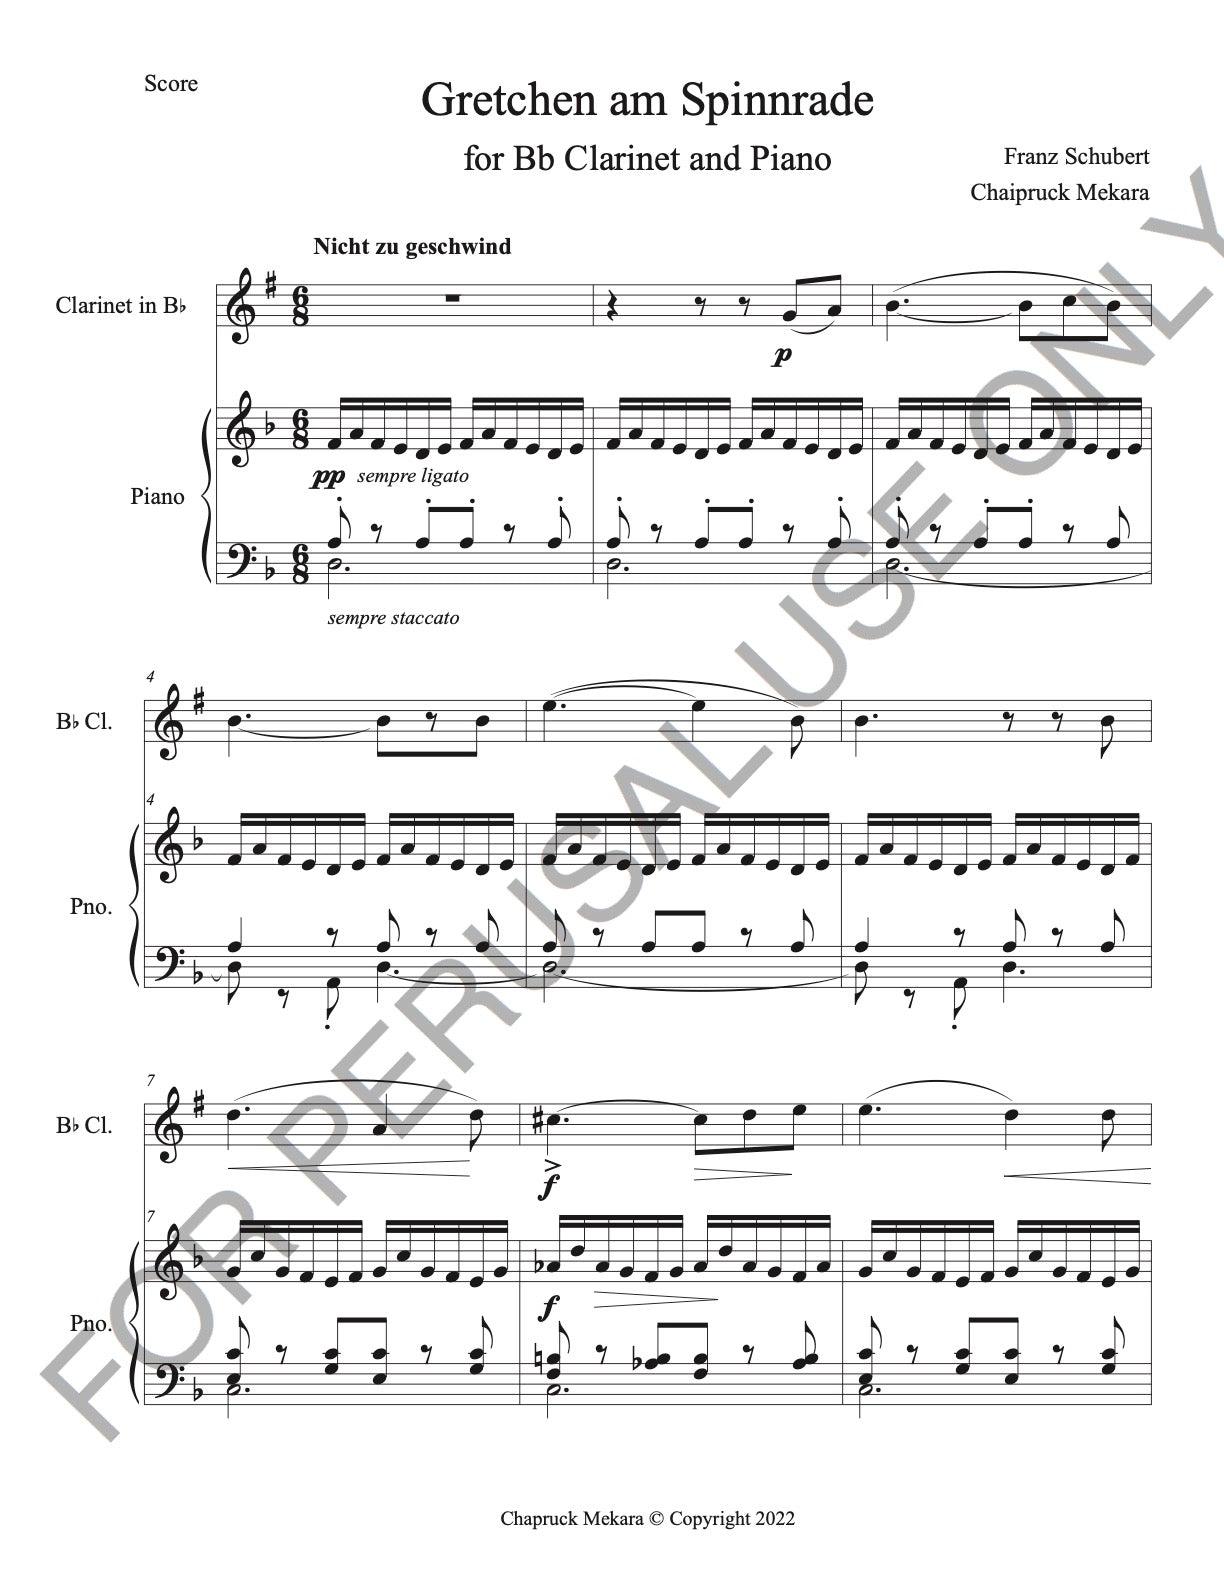 Clarinet and Piano: Schubert's Gretchen am Spinnrade - ChaipruckMekara